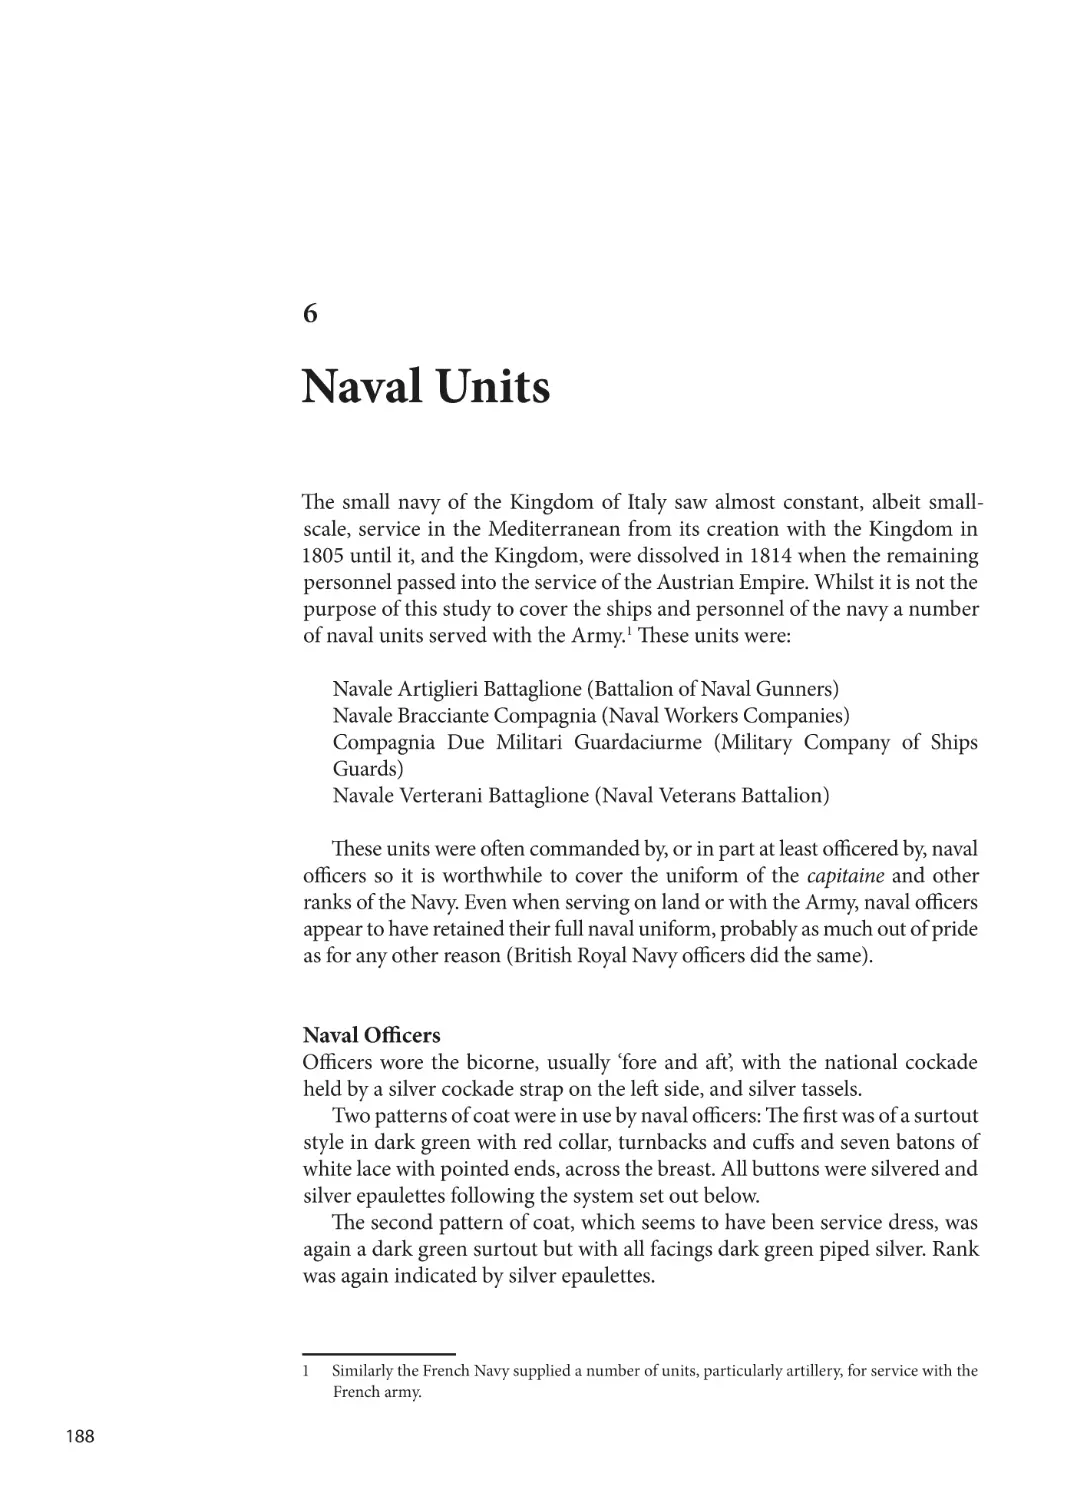 6. Naval Units